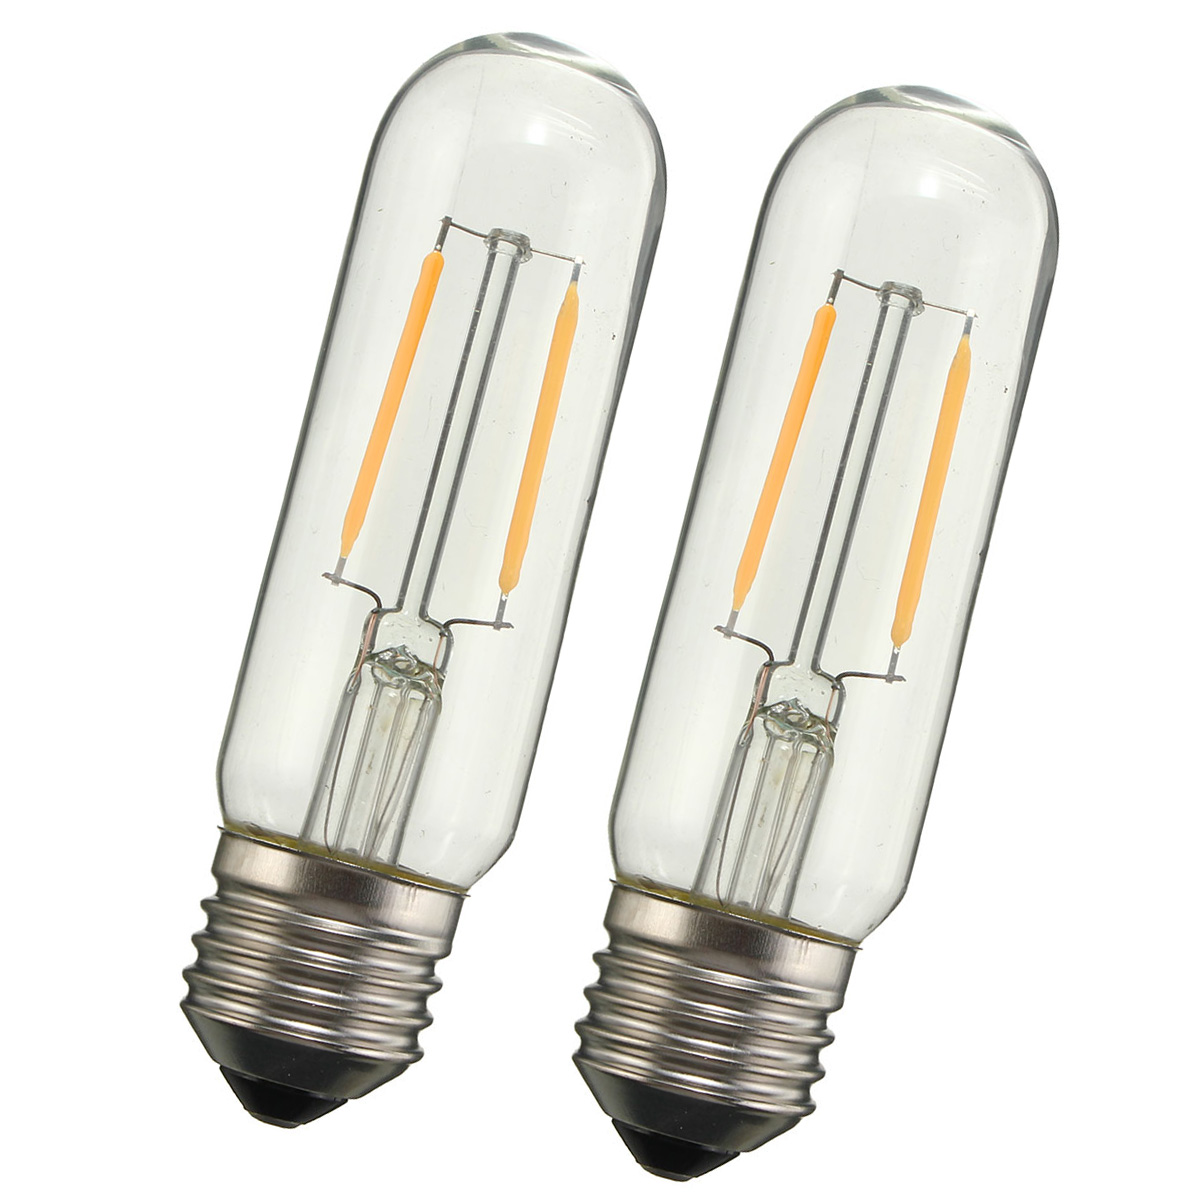 Dimmable-T10-E27-2W-COB-Pure-White-Warm-White-200Lumens-Retro-Edison-Light-Bulb-AC110V-AC220V-1070533-6